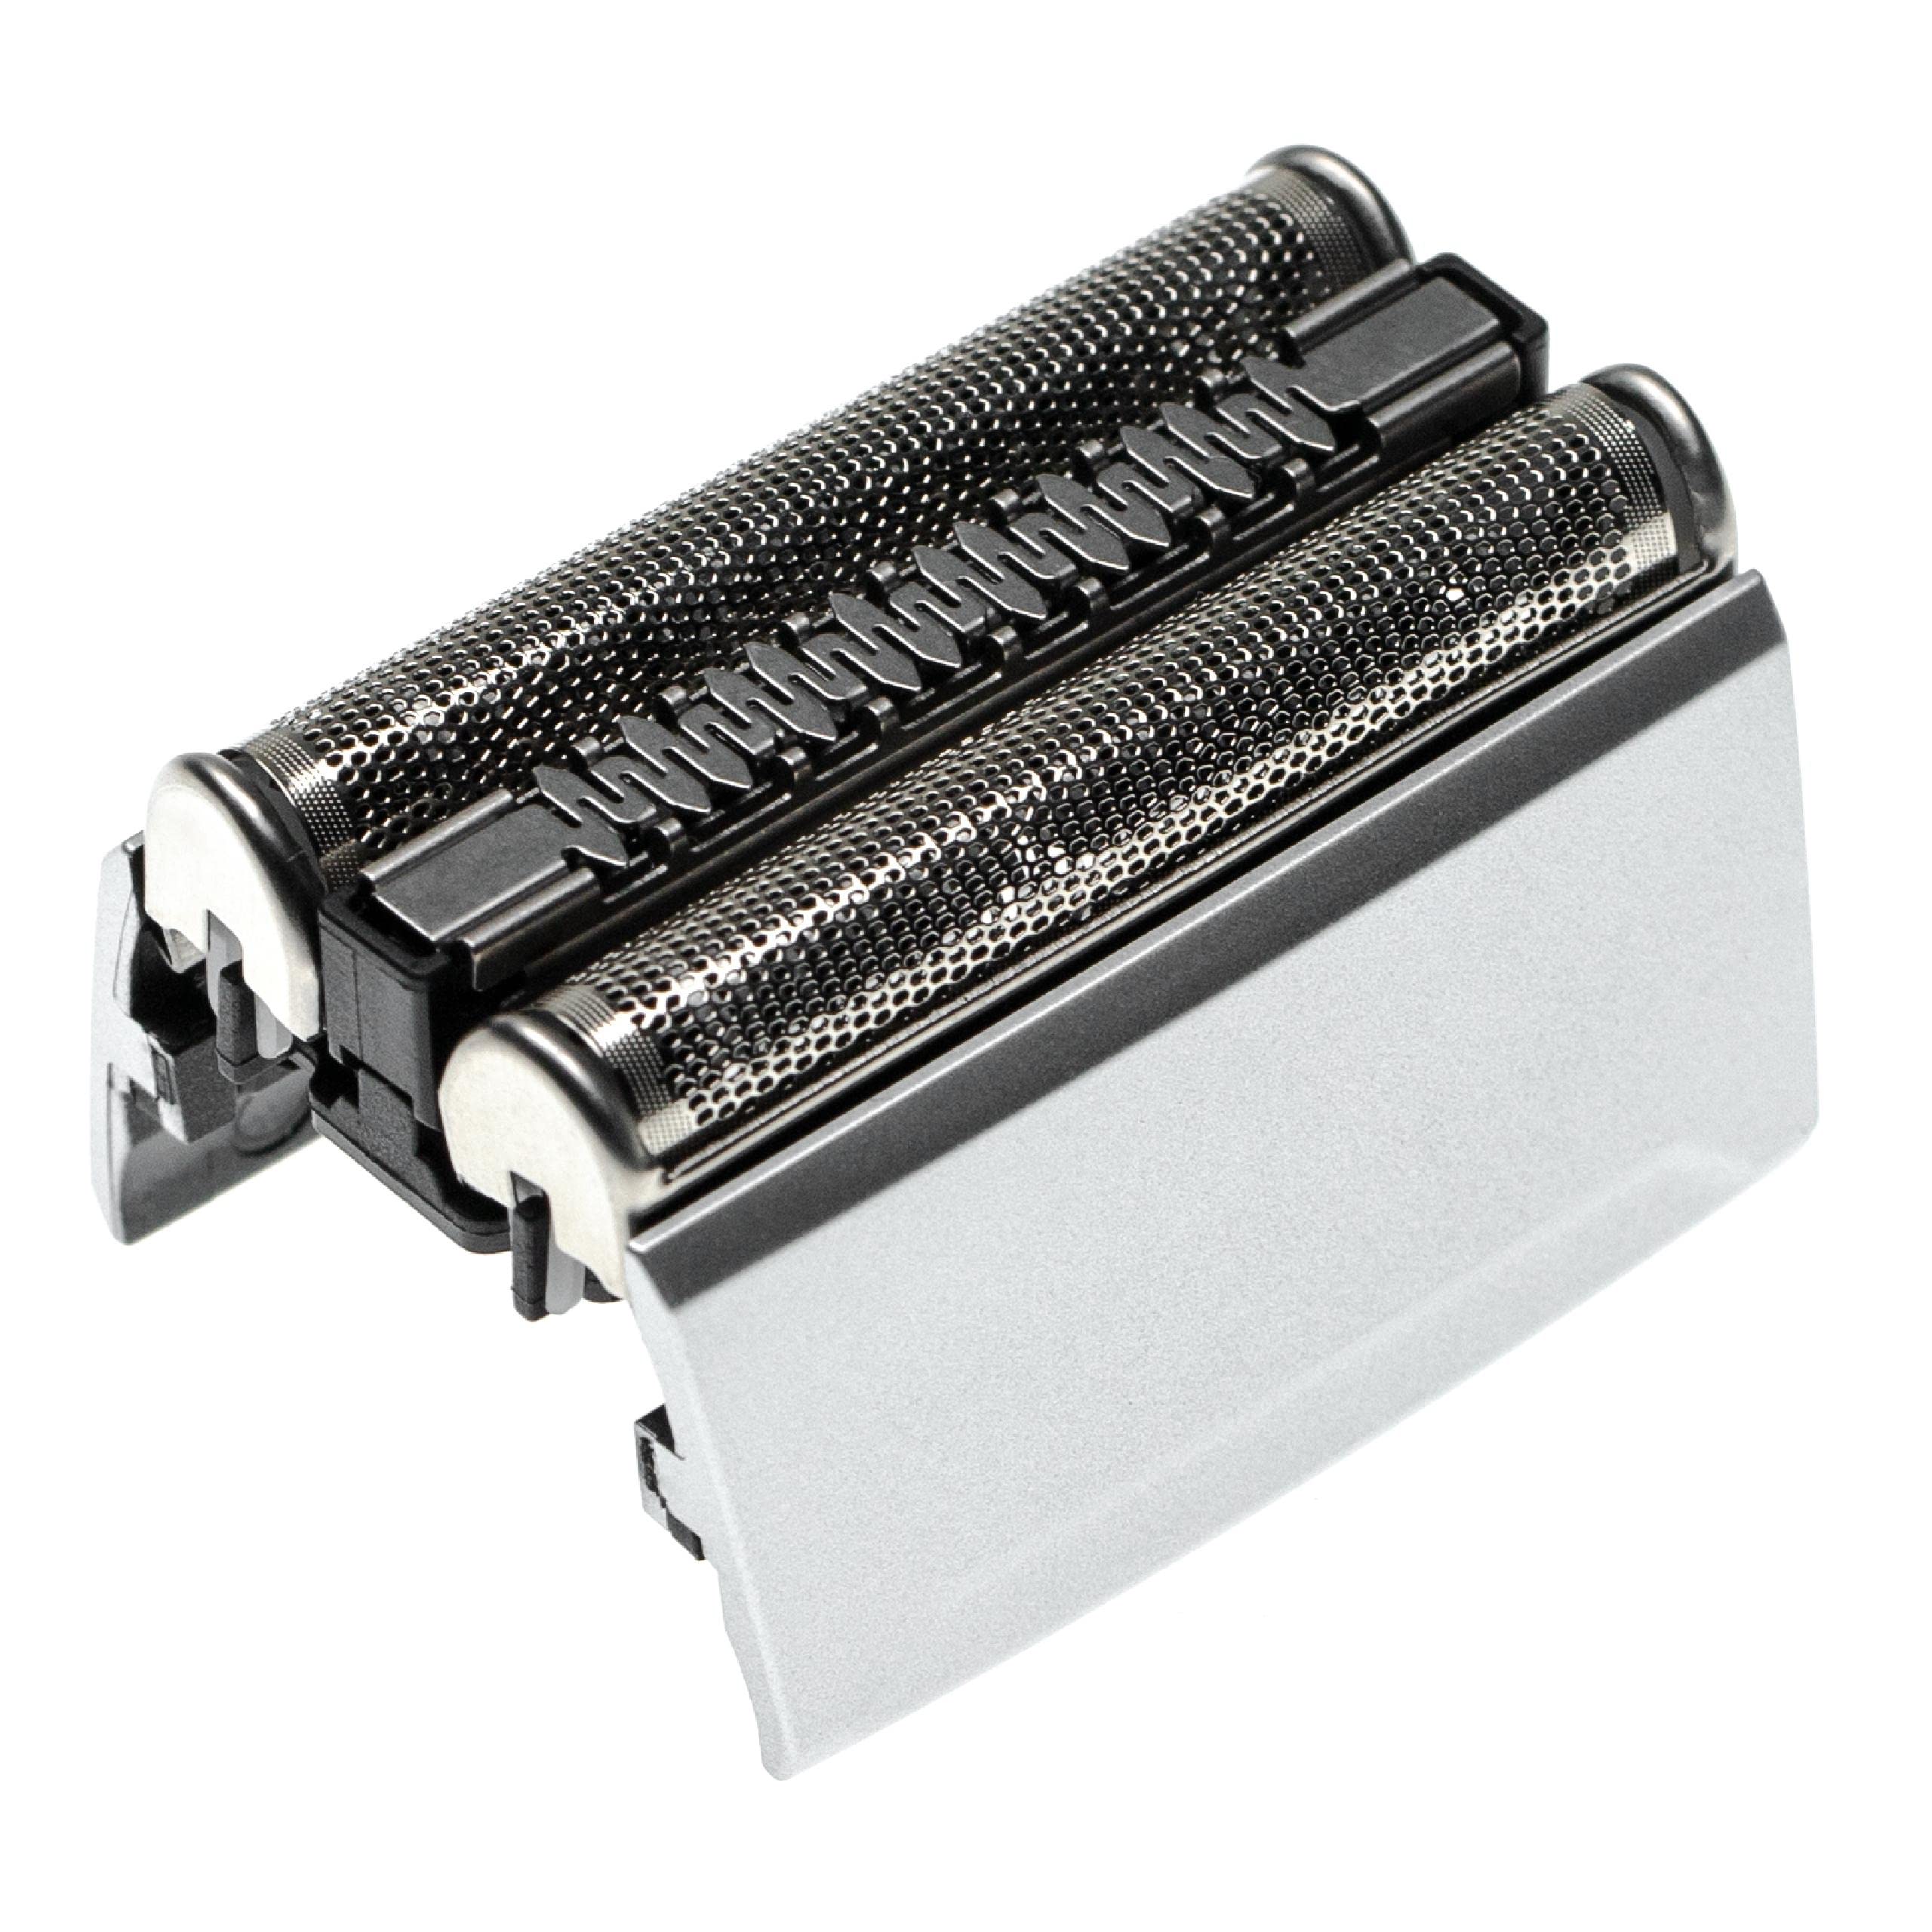 vhbw Rasierkopf kompatibel mit Braun 5050cc (5748/5749), 5070cc (5748/5749), 5080cc (5748/5749) Elektrorasierer - Scherkopfkassette, silber